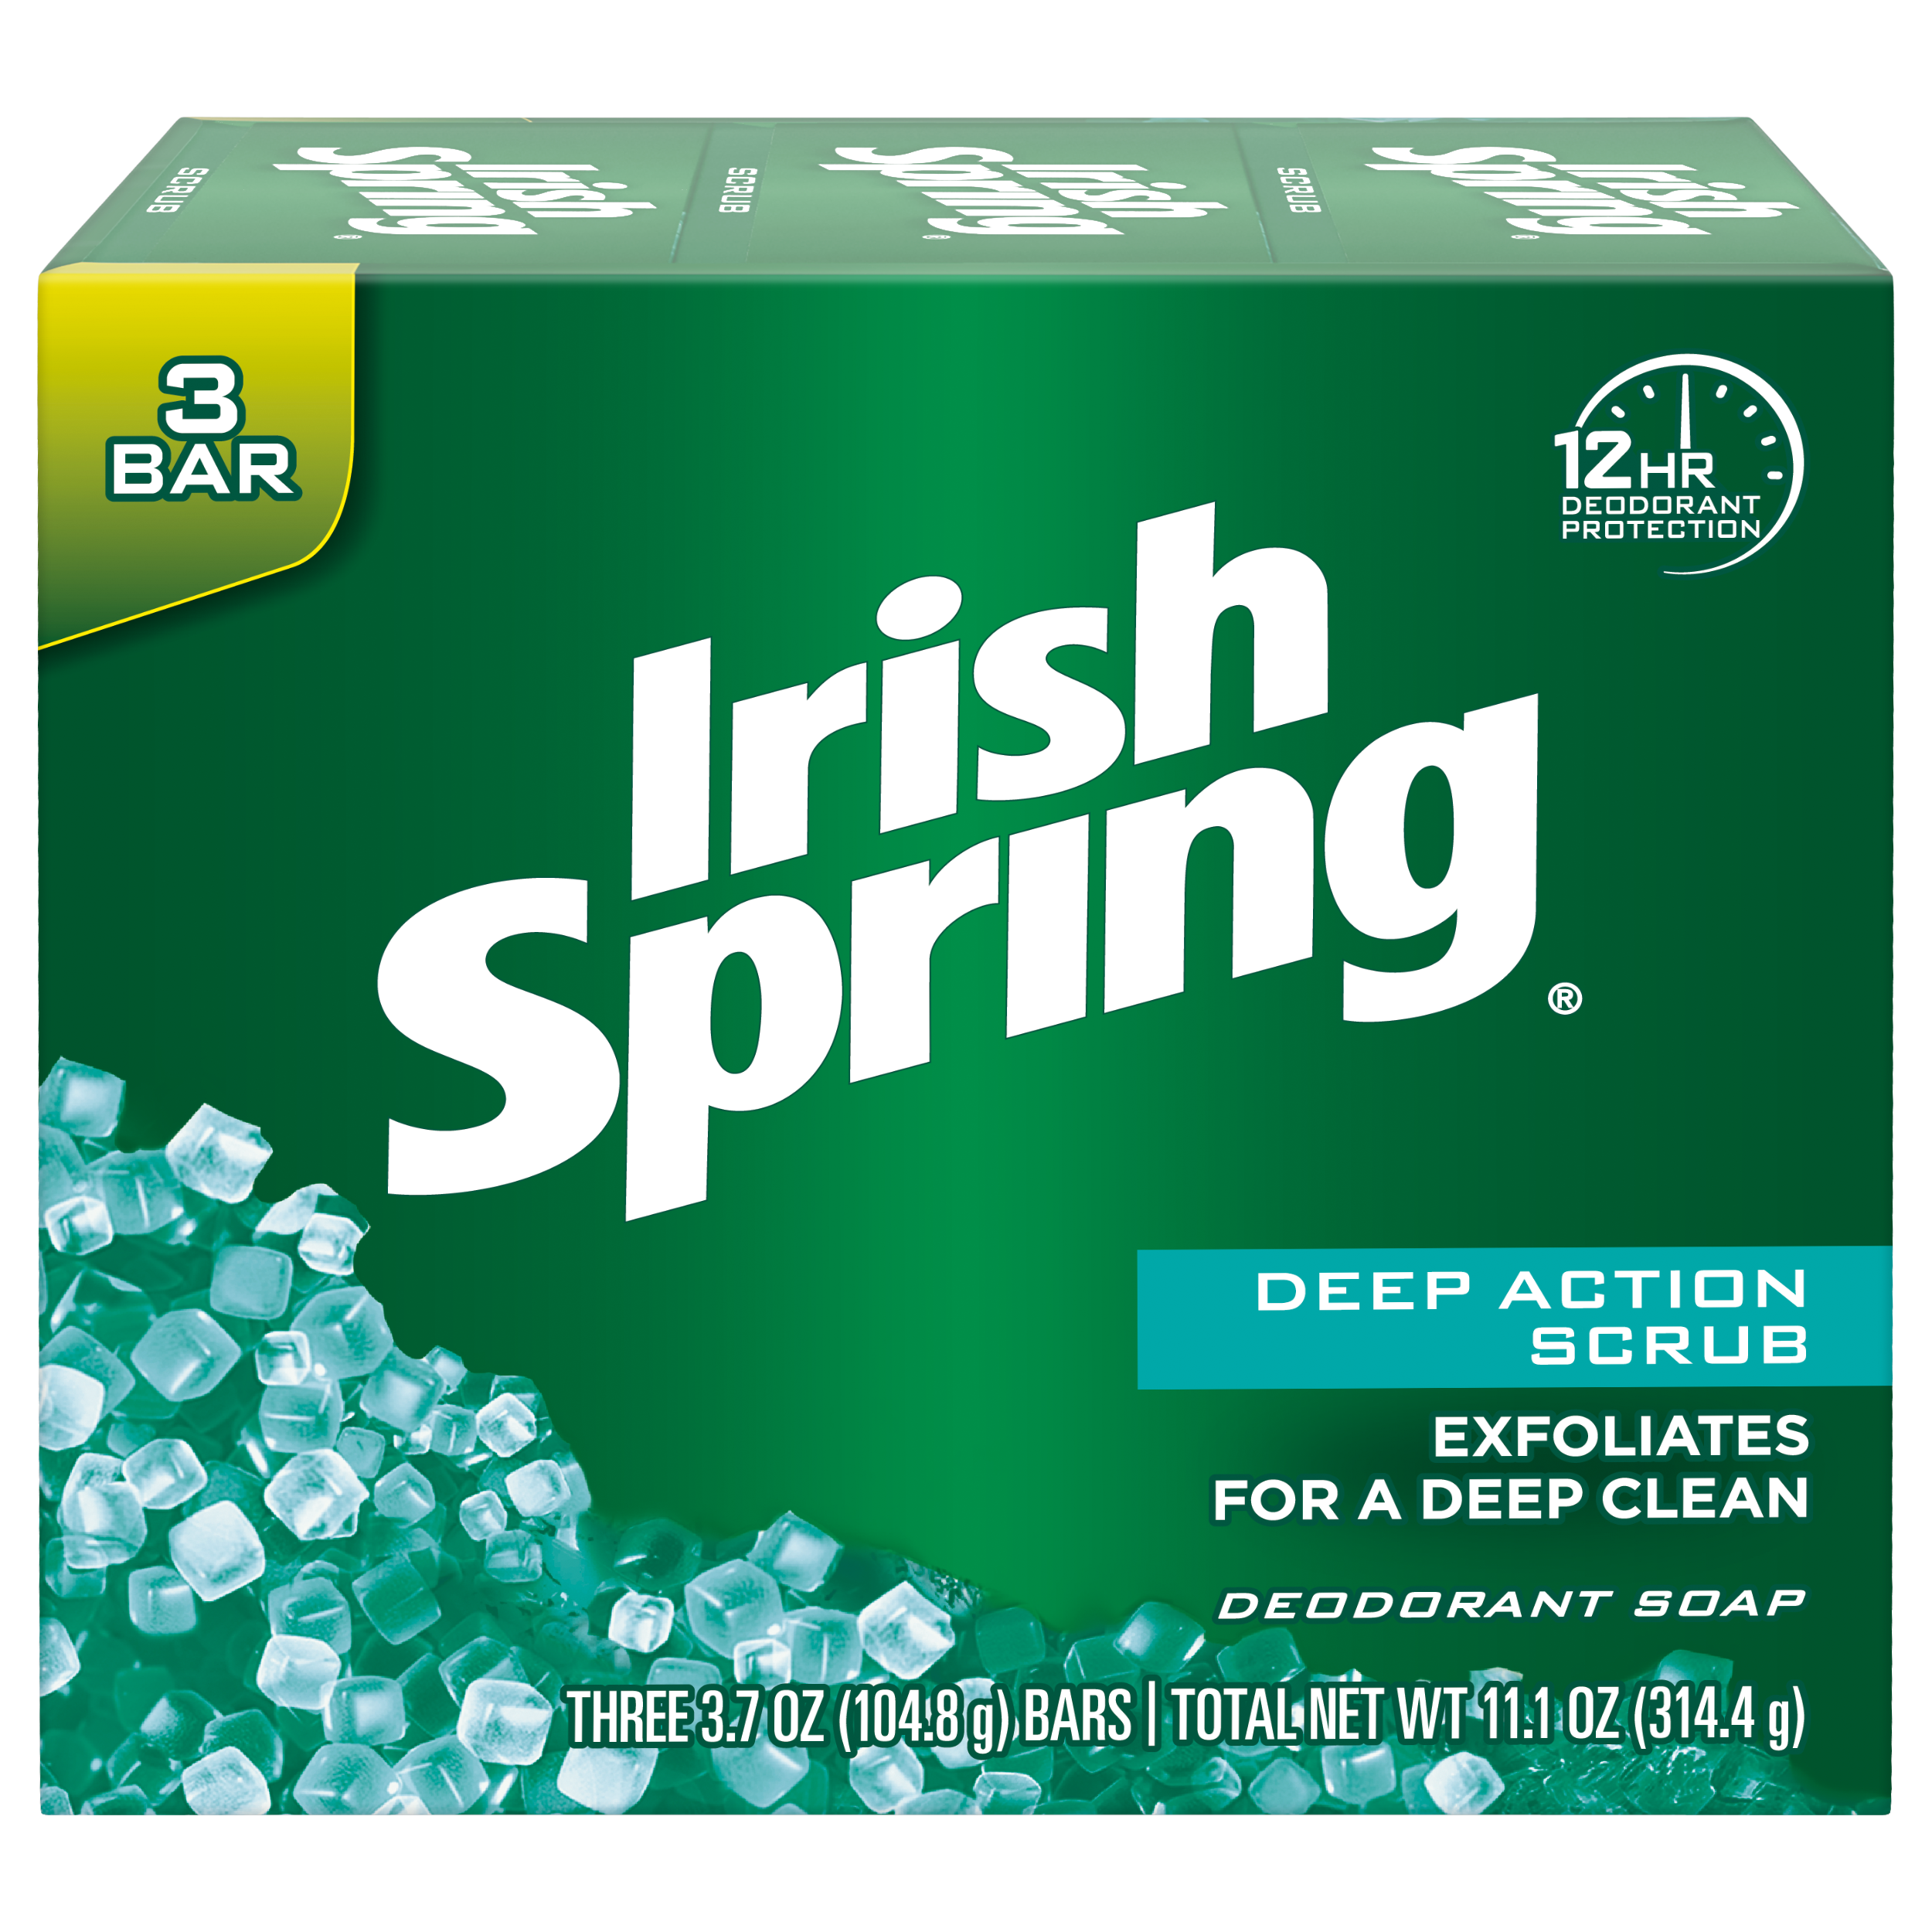 Deep Action Scrub Deodorant Soap by Irish Spring, 3 Ct - image 1 of 4